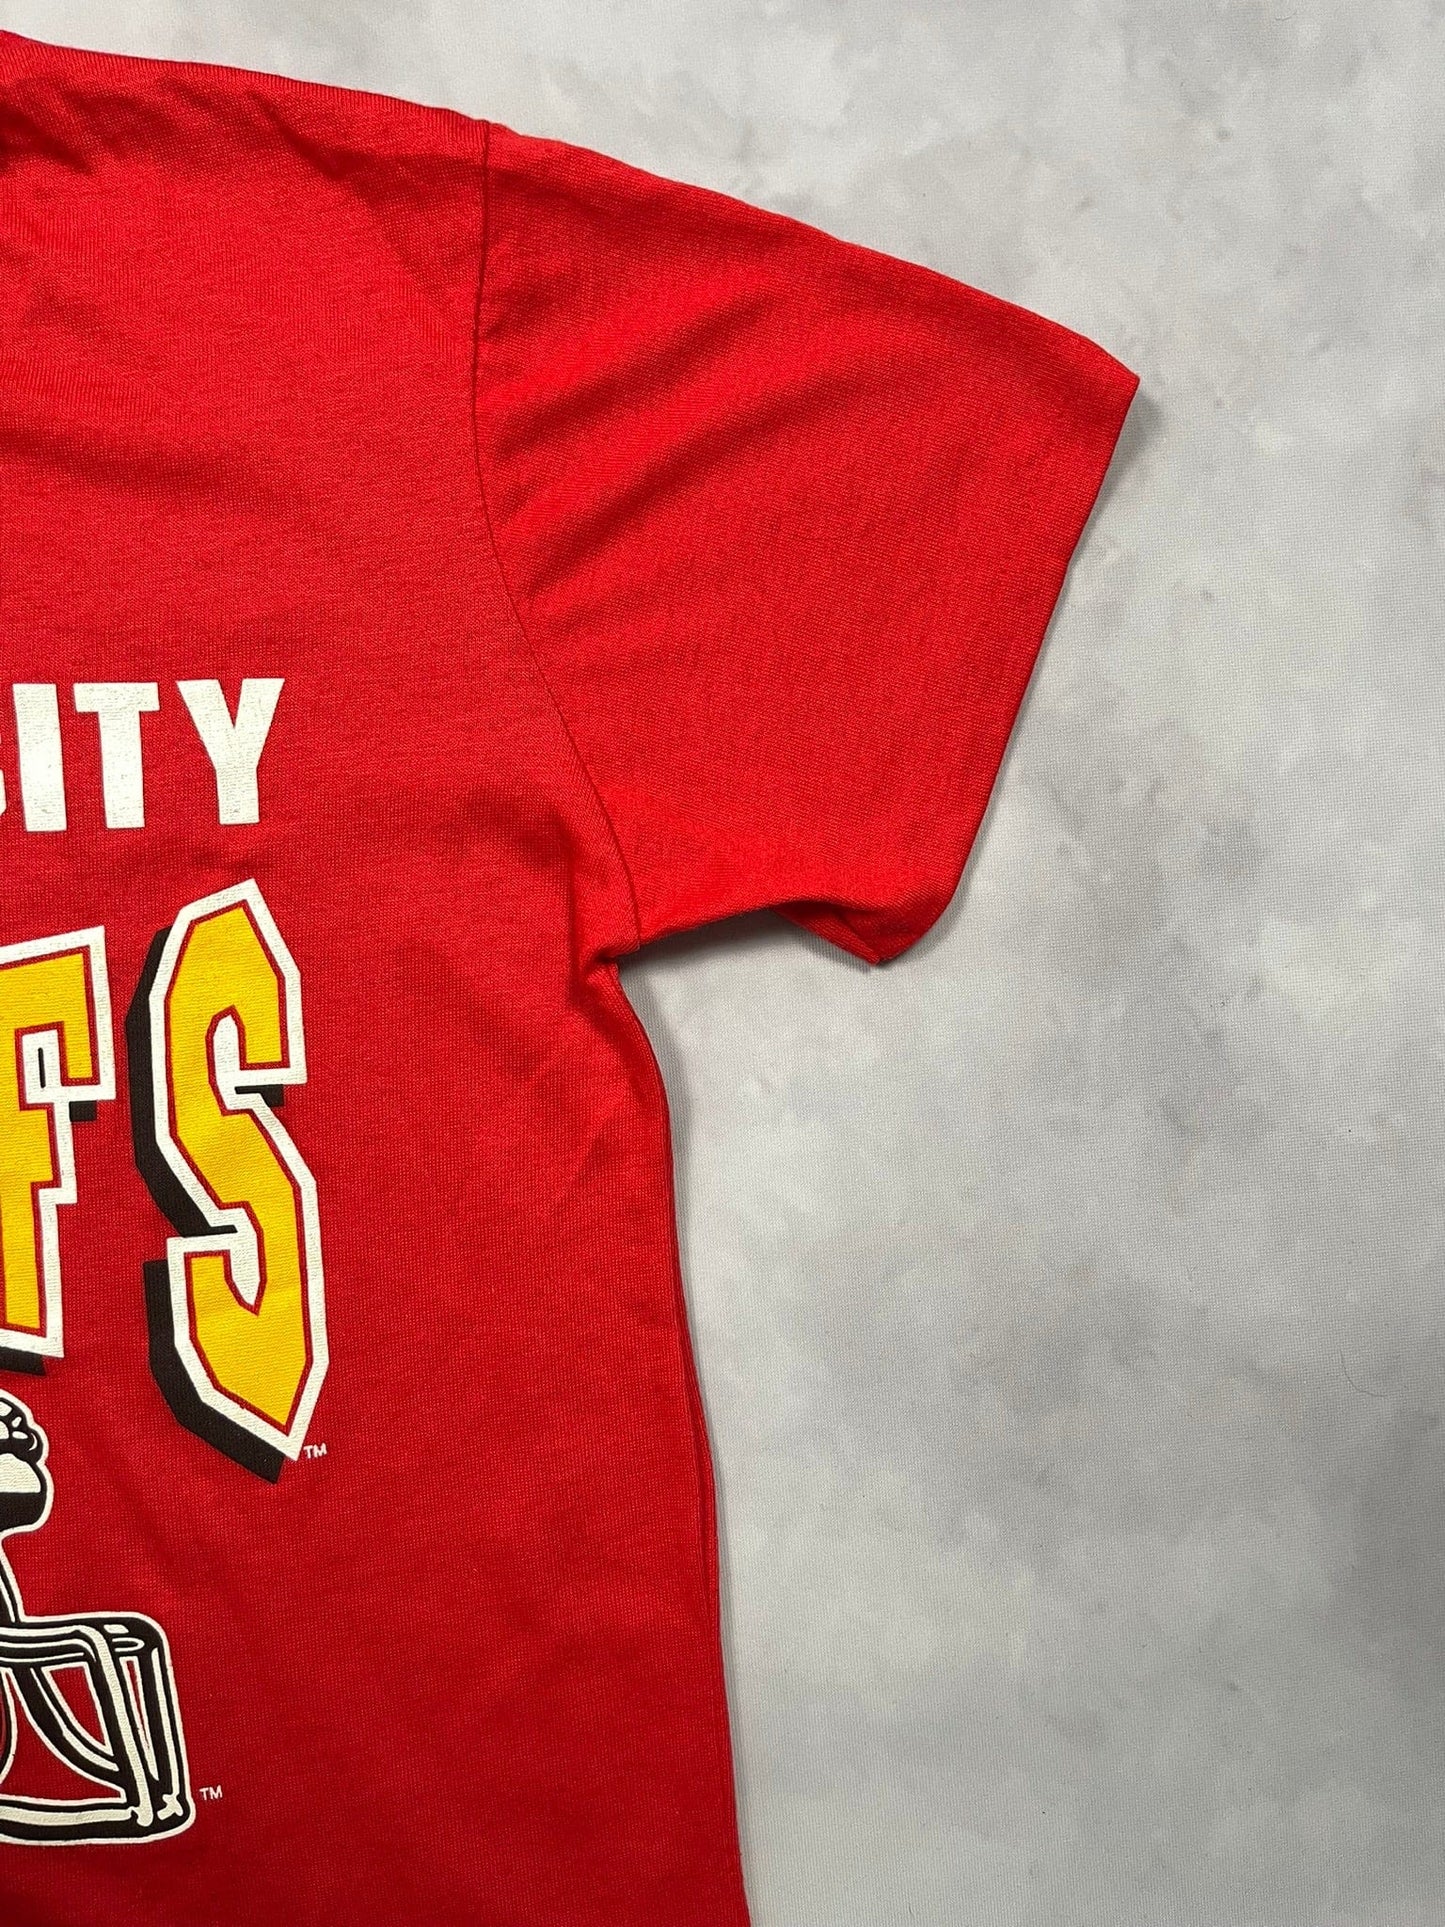 The Vintage Racks T-Shirt Kansas City Chiefs - Large